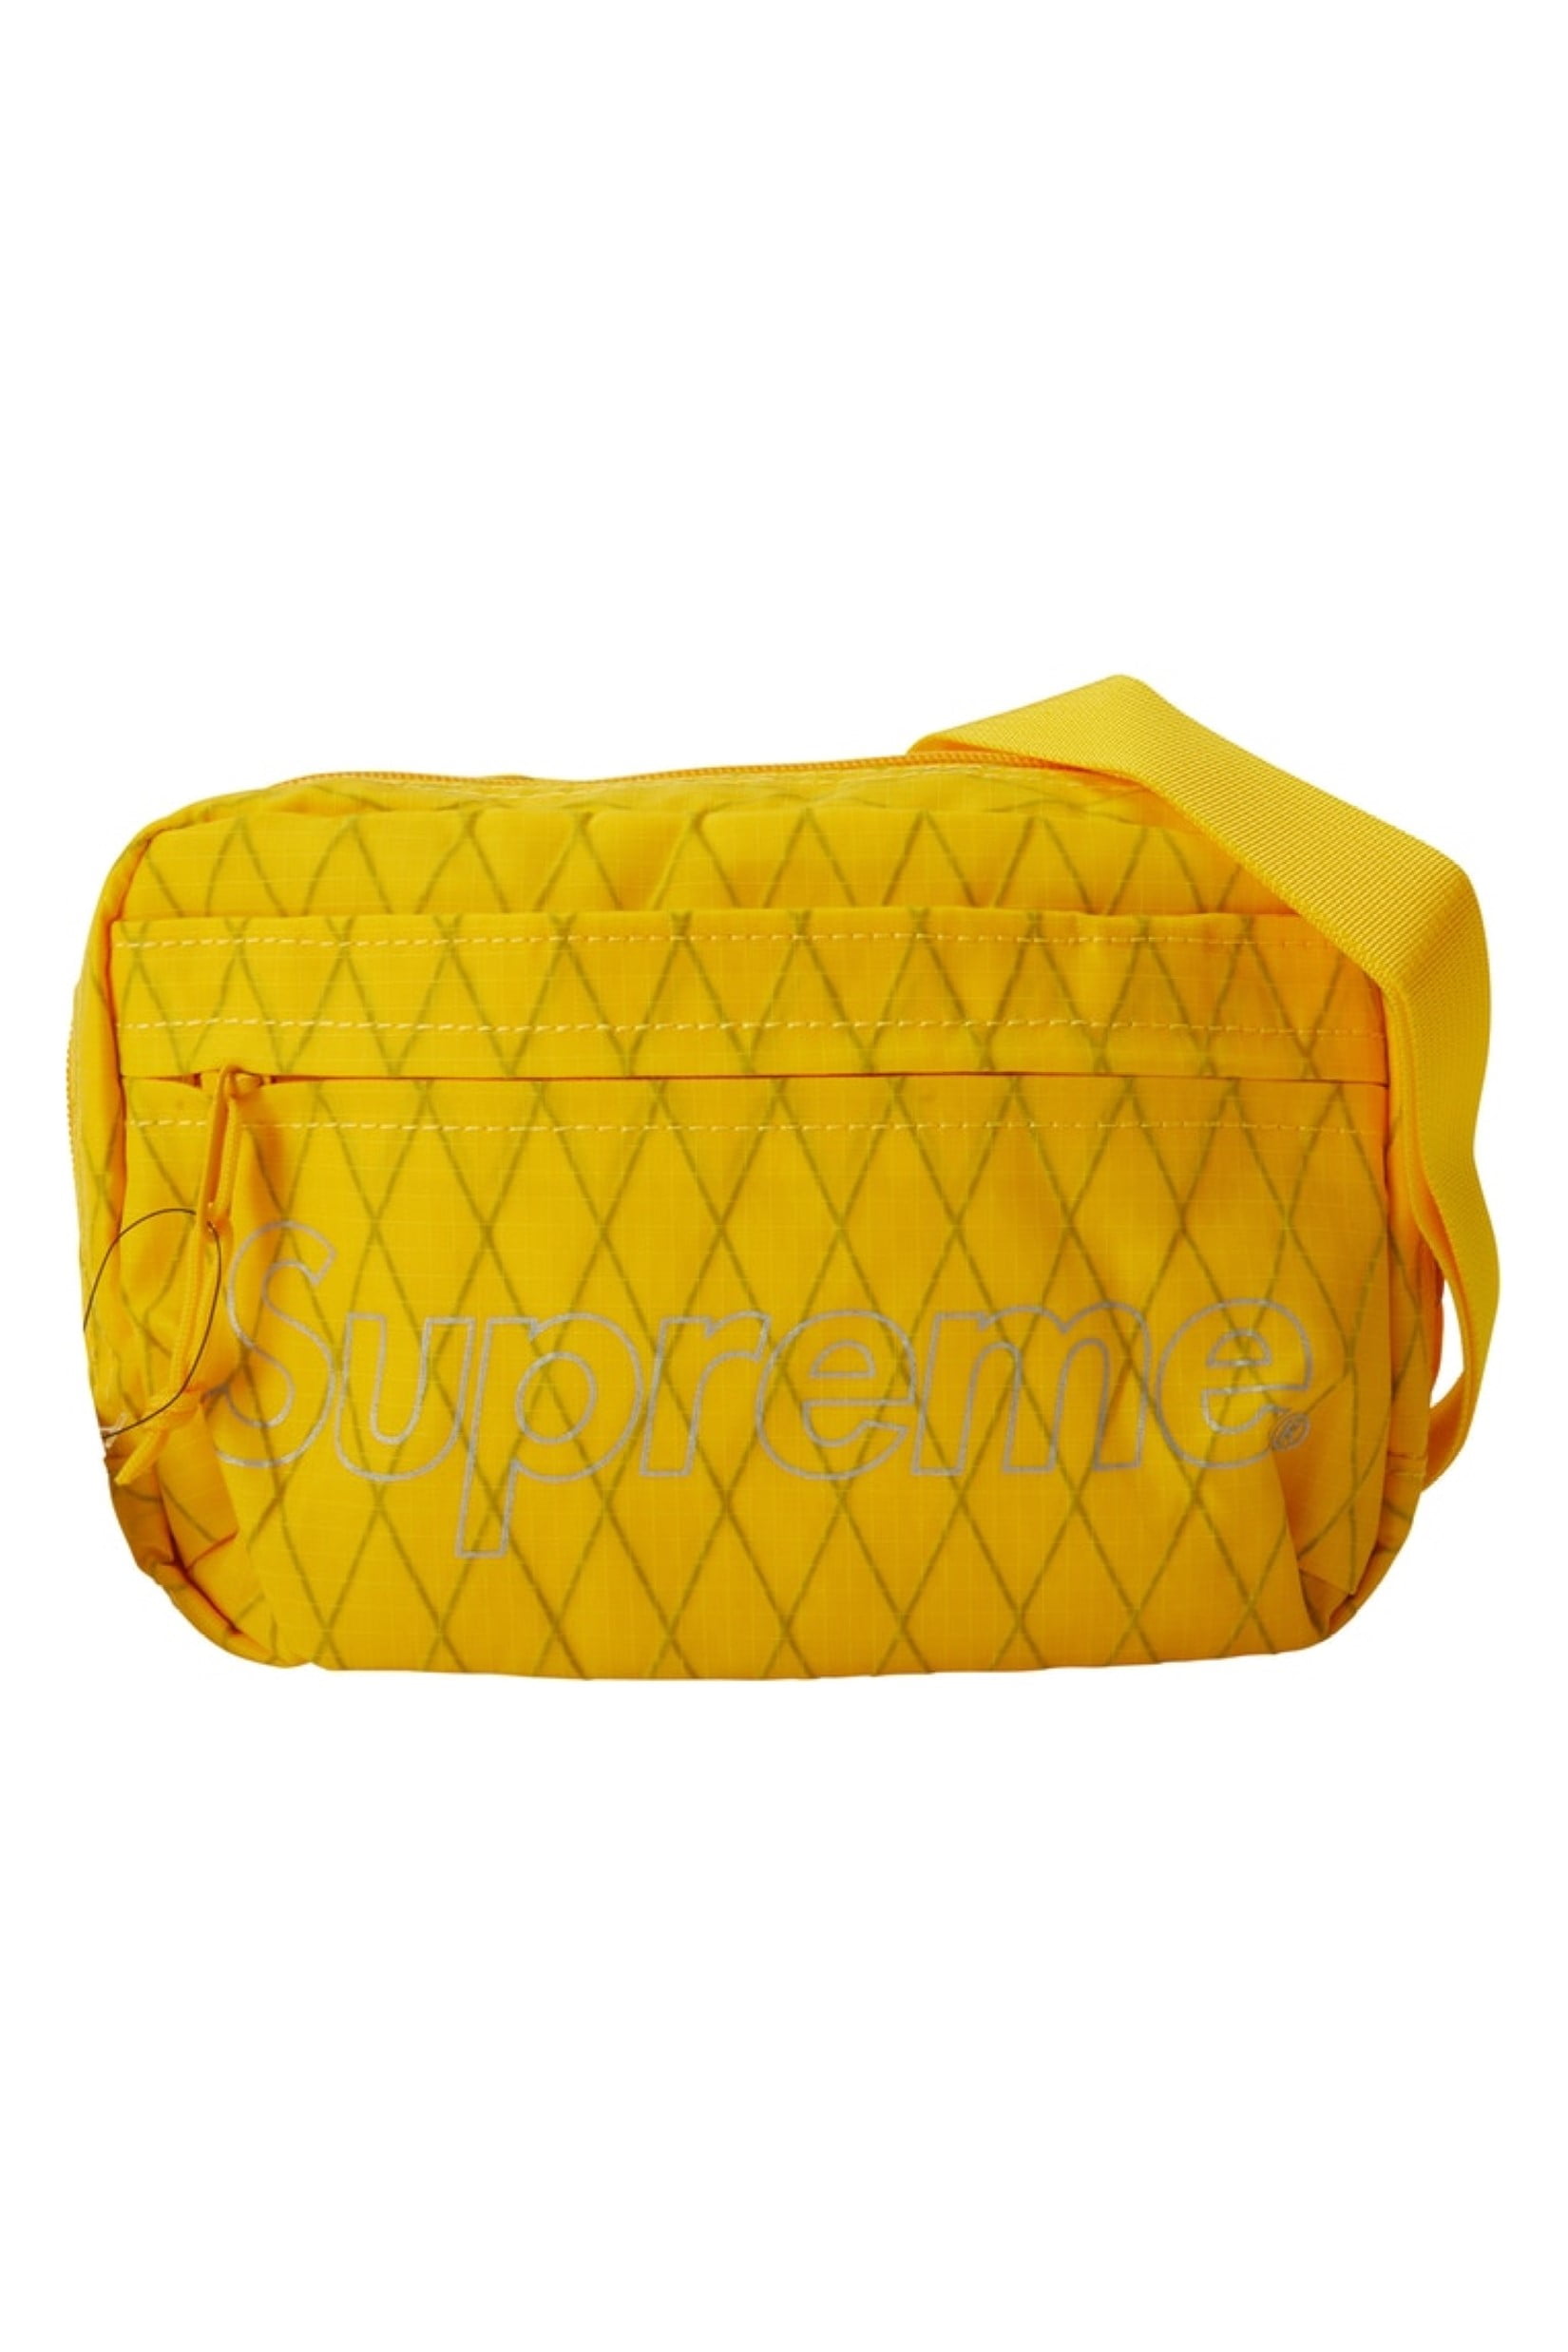 supreme shoulder bag fw18 yellow